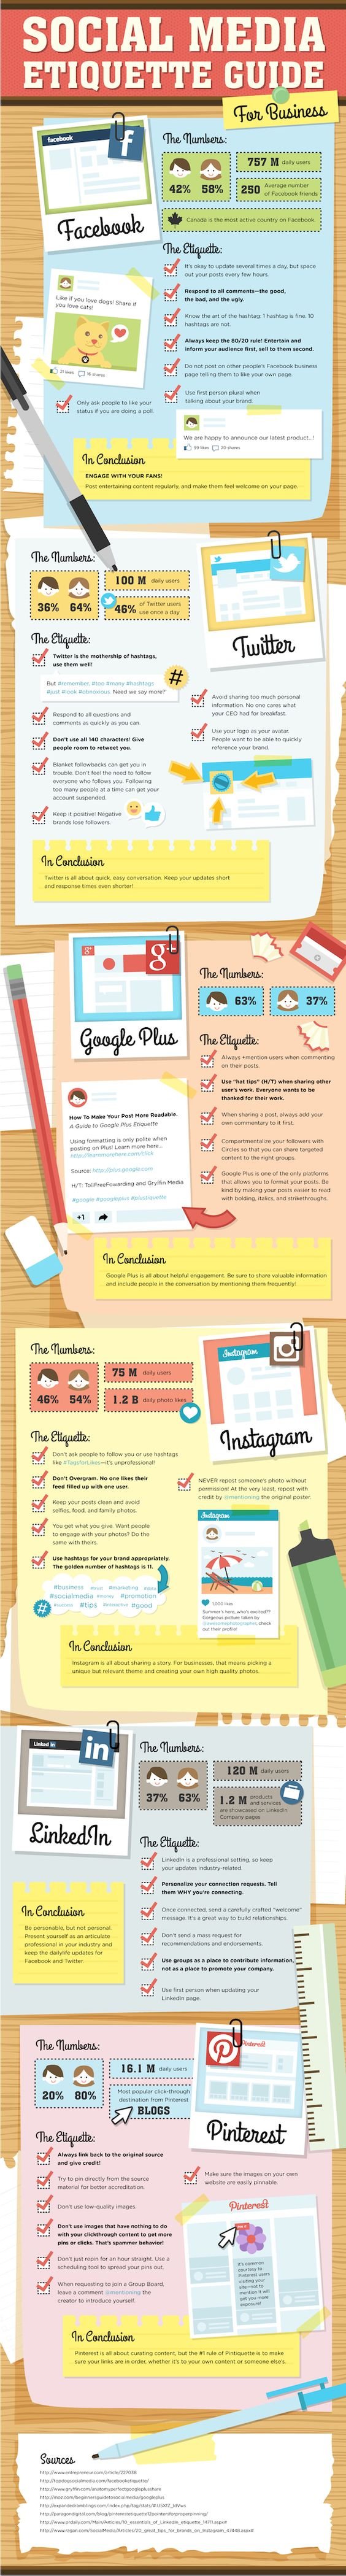 A Social Media Etiquette Guide For 6 Popular Social Media Platforms